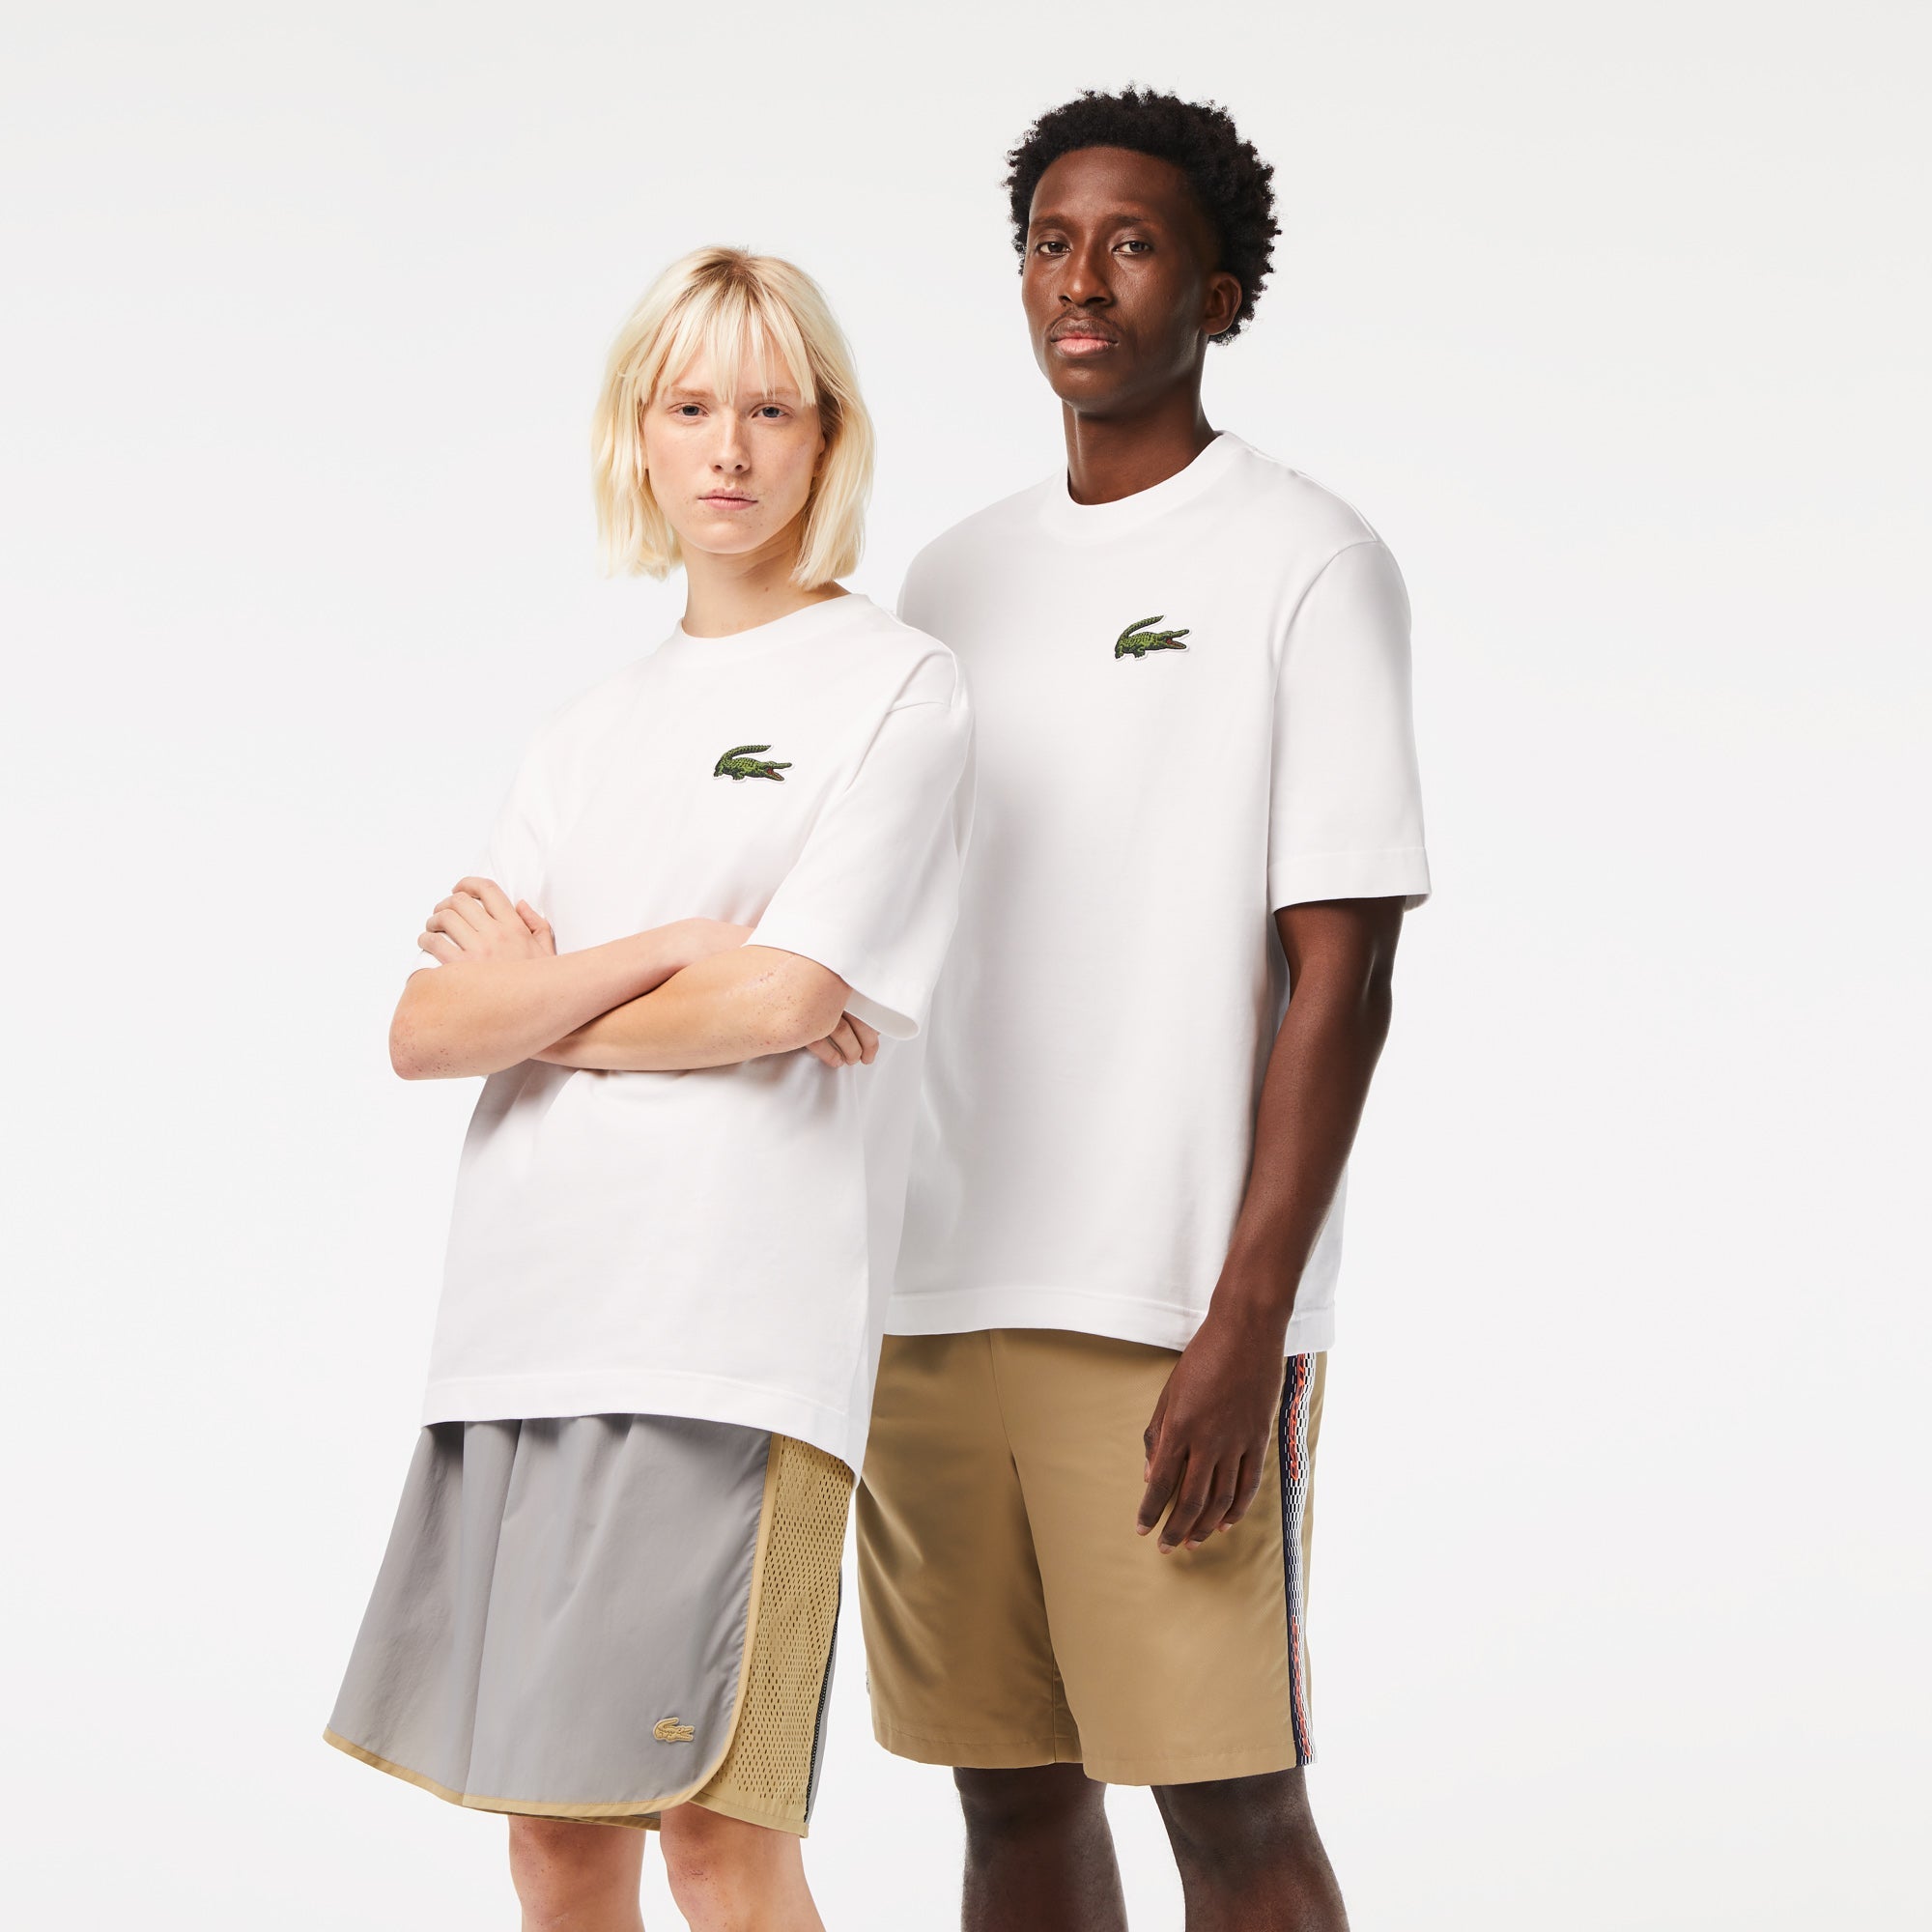 Lacoste Unisex Loose Fit Large Crocodile Organic Cotton T-Shirt White TH0062 001